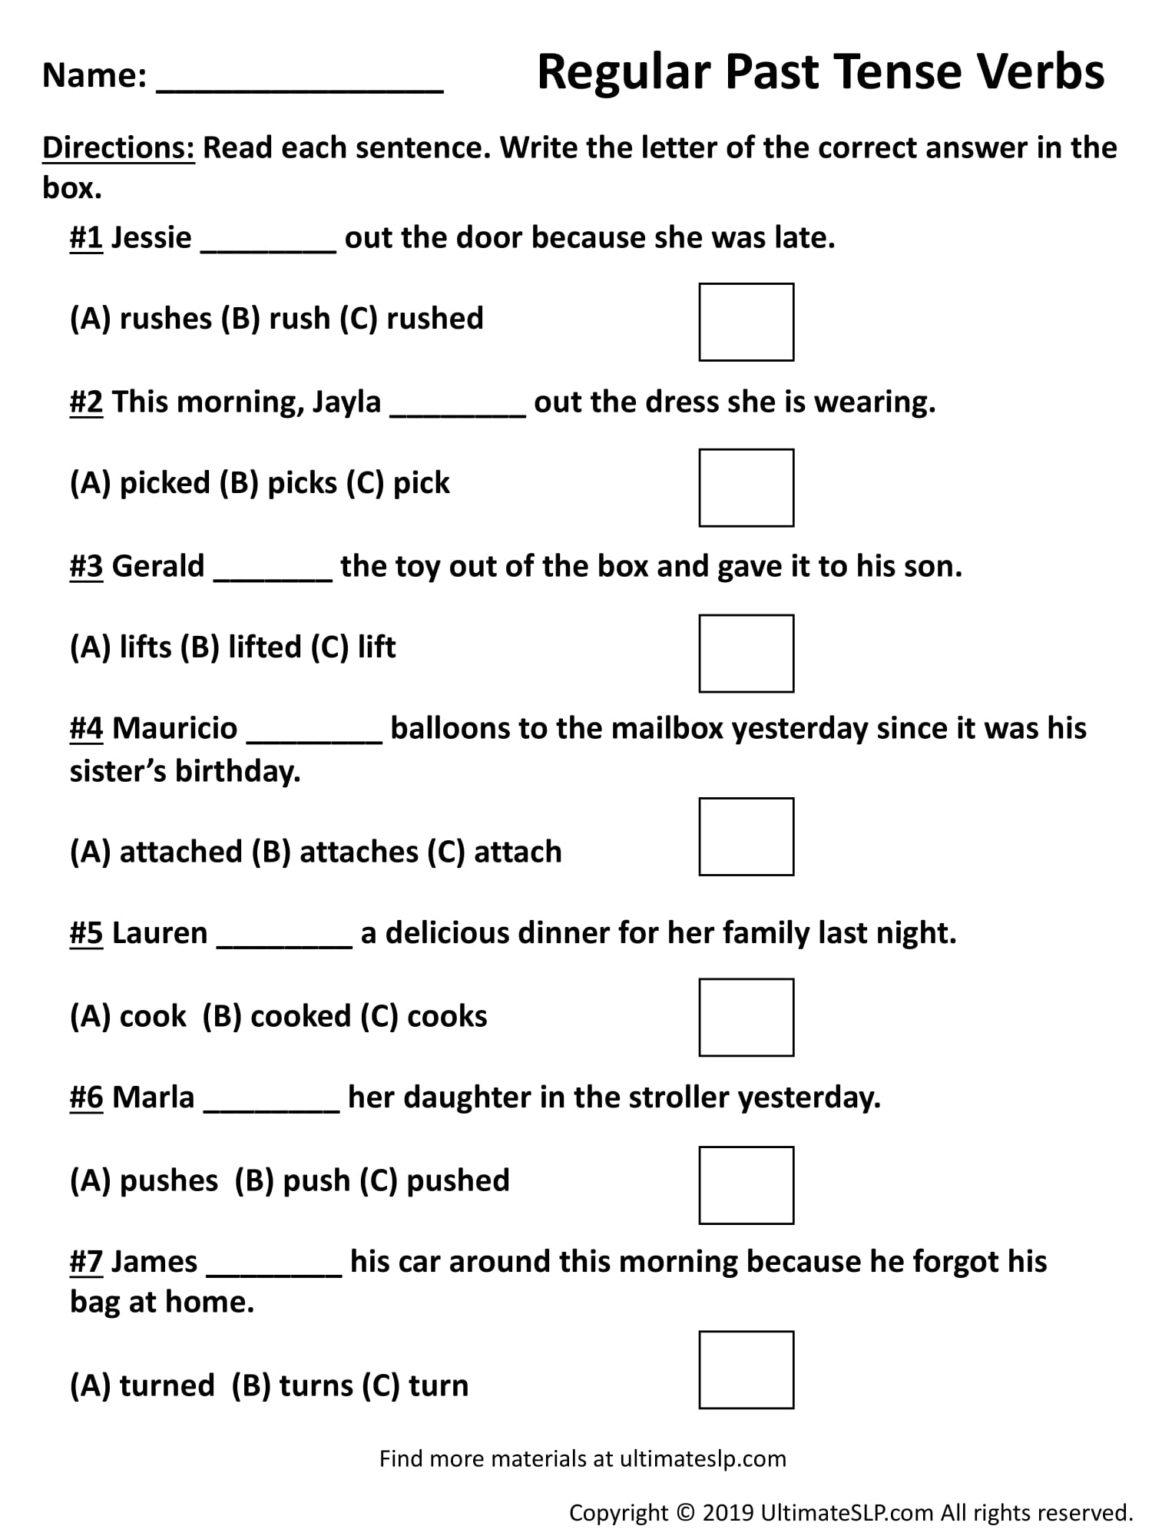 Regular Past Tense Verbs Worksheets 1st Grade